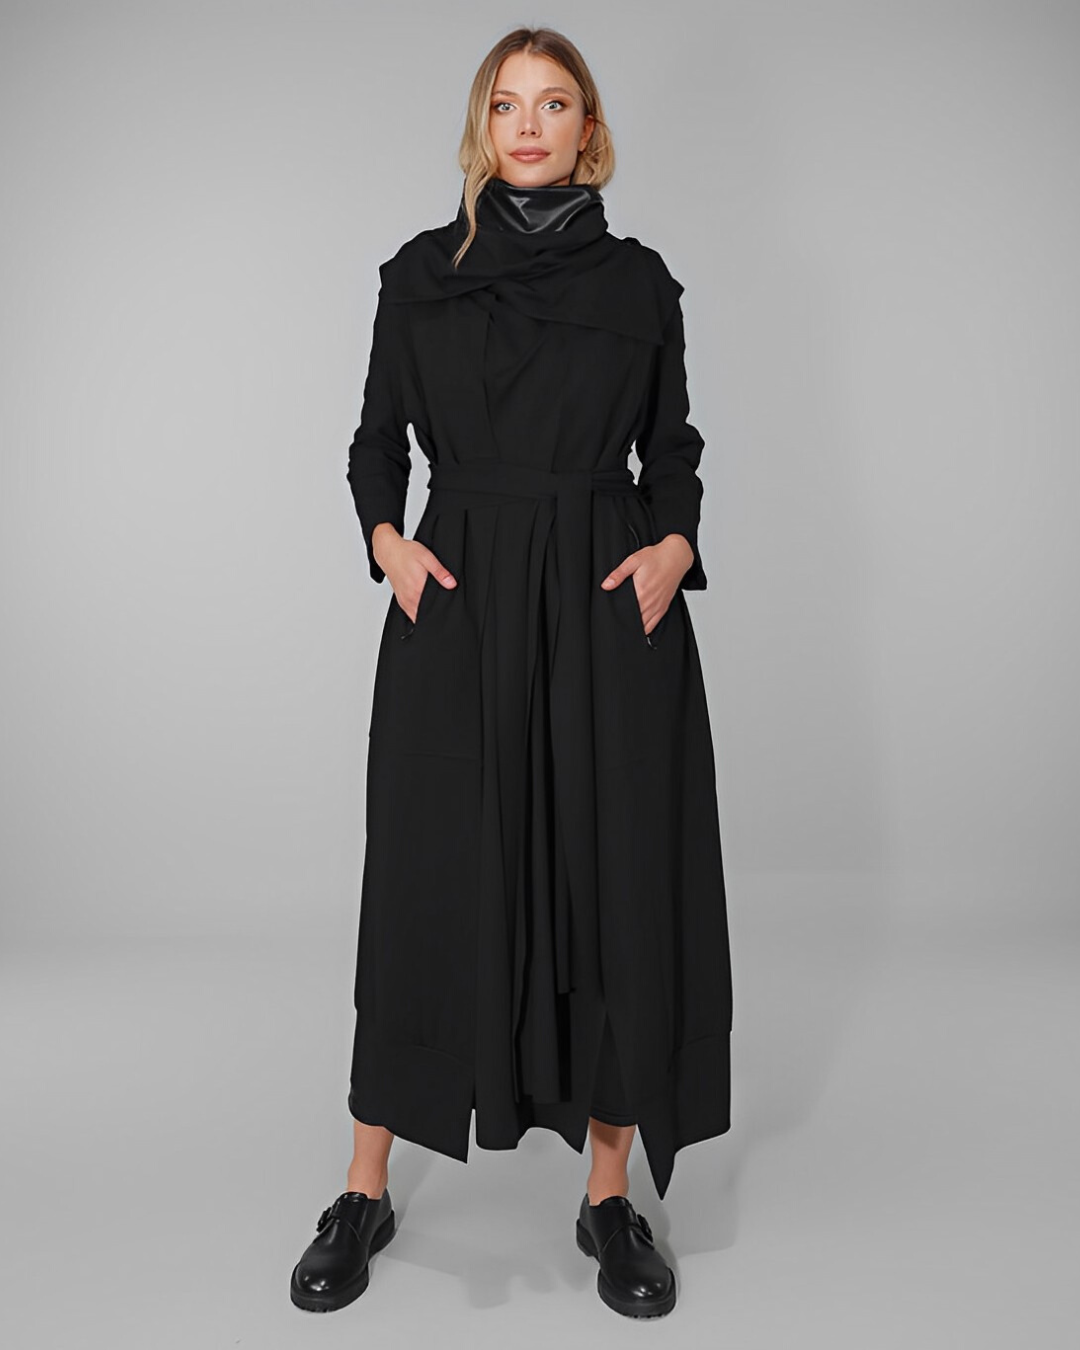 Fashion Forward Coat Design 22823 - Black